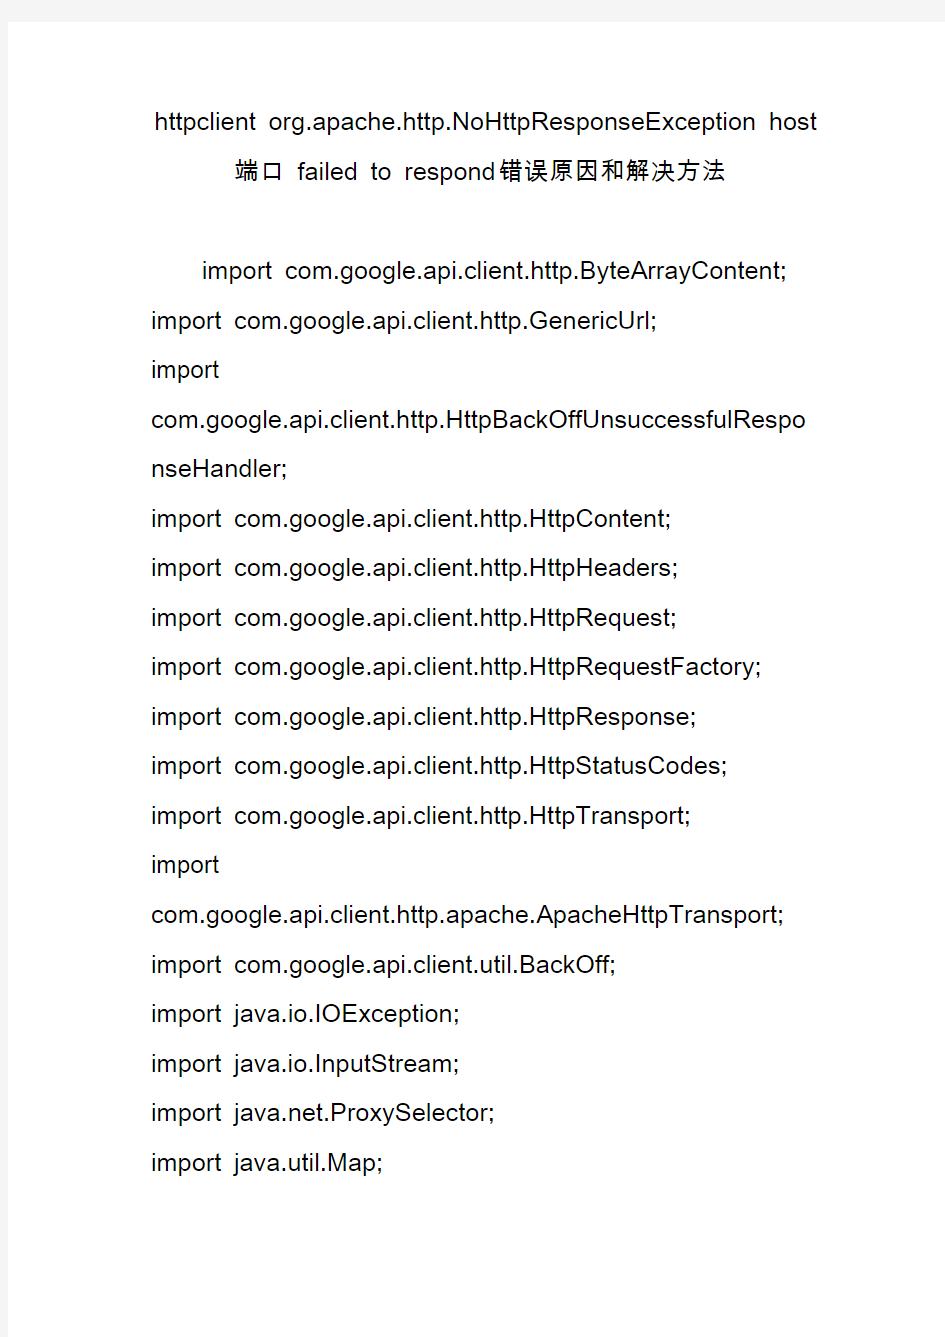 httpclientorg.apache.http.nohttpresponseexceptionhost端口failedtorespond错误原因和解决方法